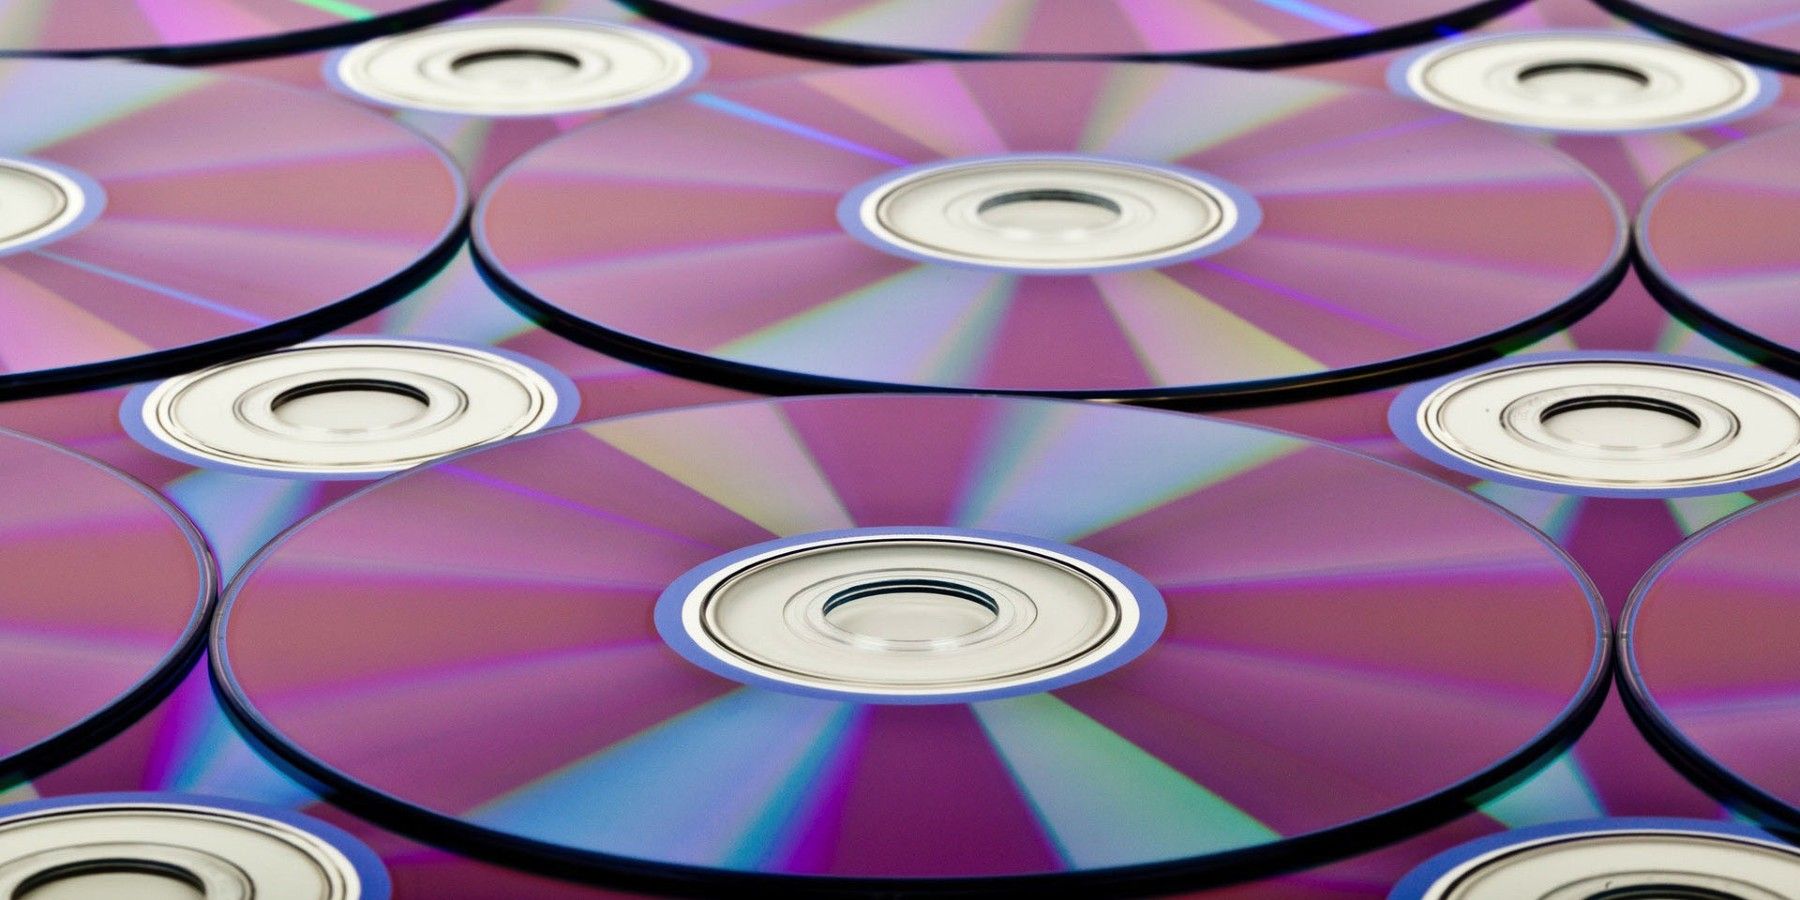 video game cds dvds bluray discs